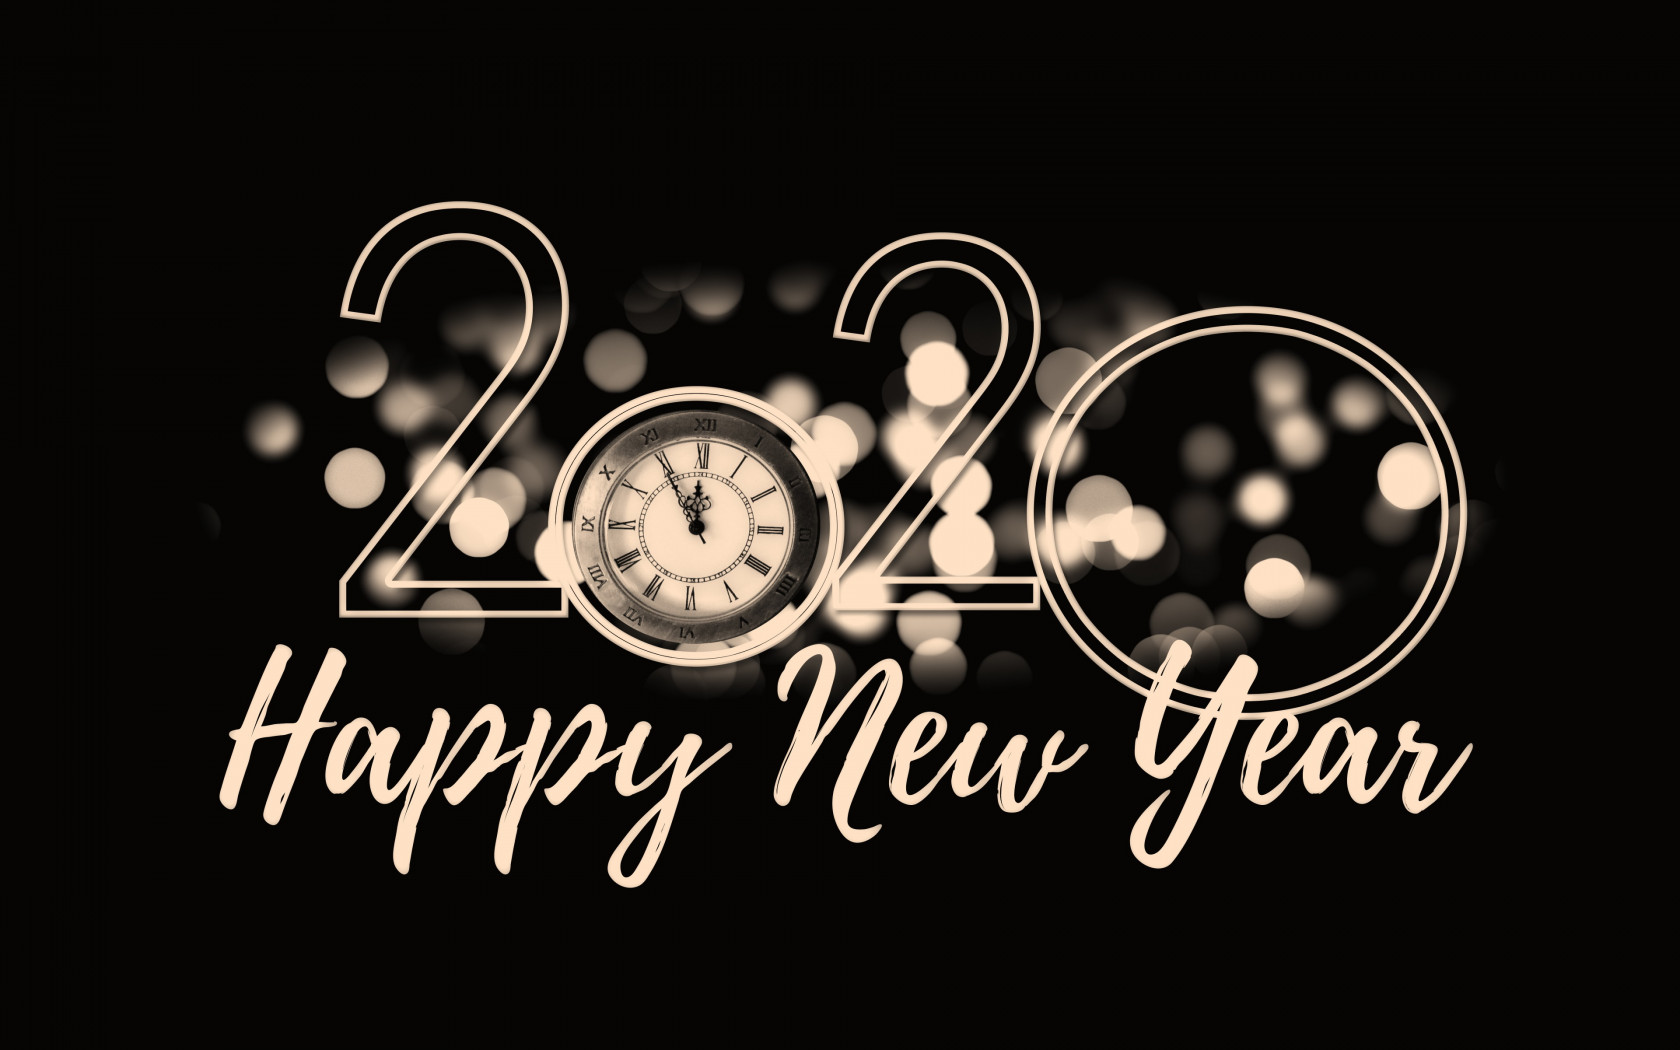 2020 Happy New Year wallpaper 1680x1050